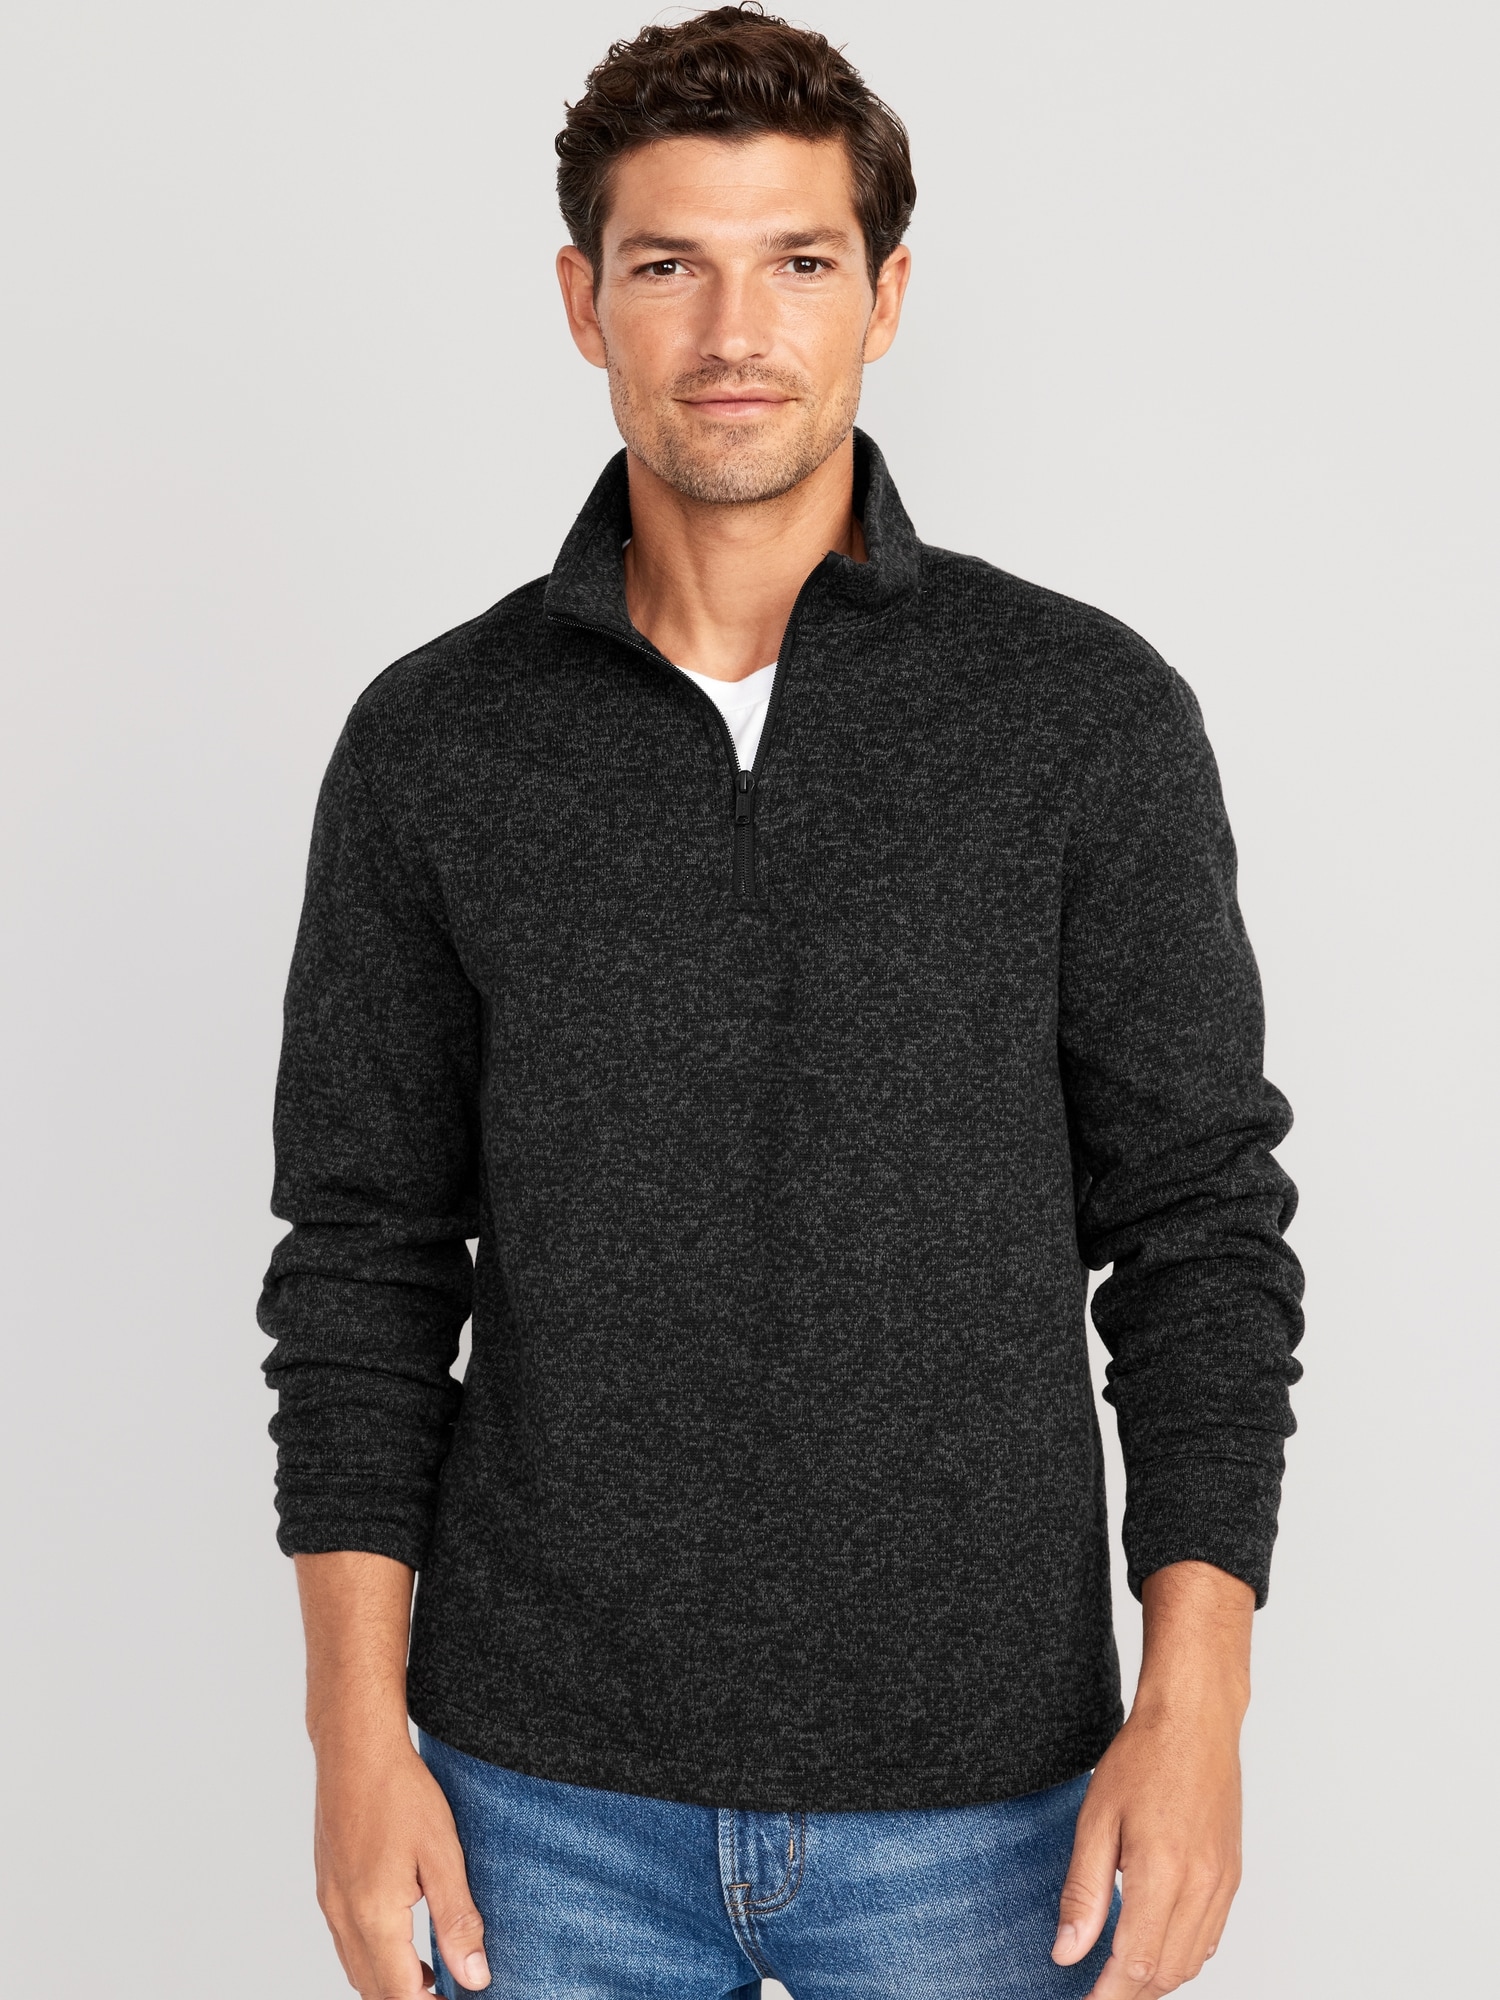 Sweater-Knit Quarter Zip